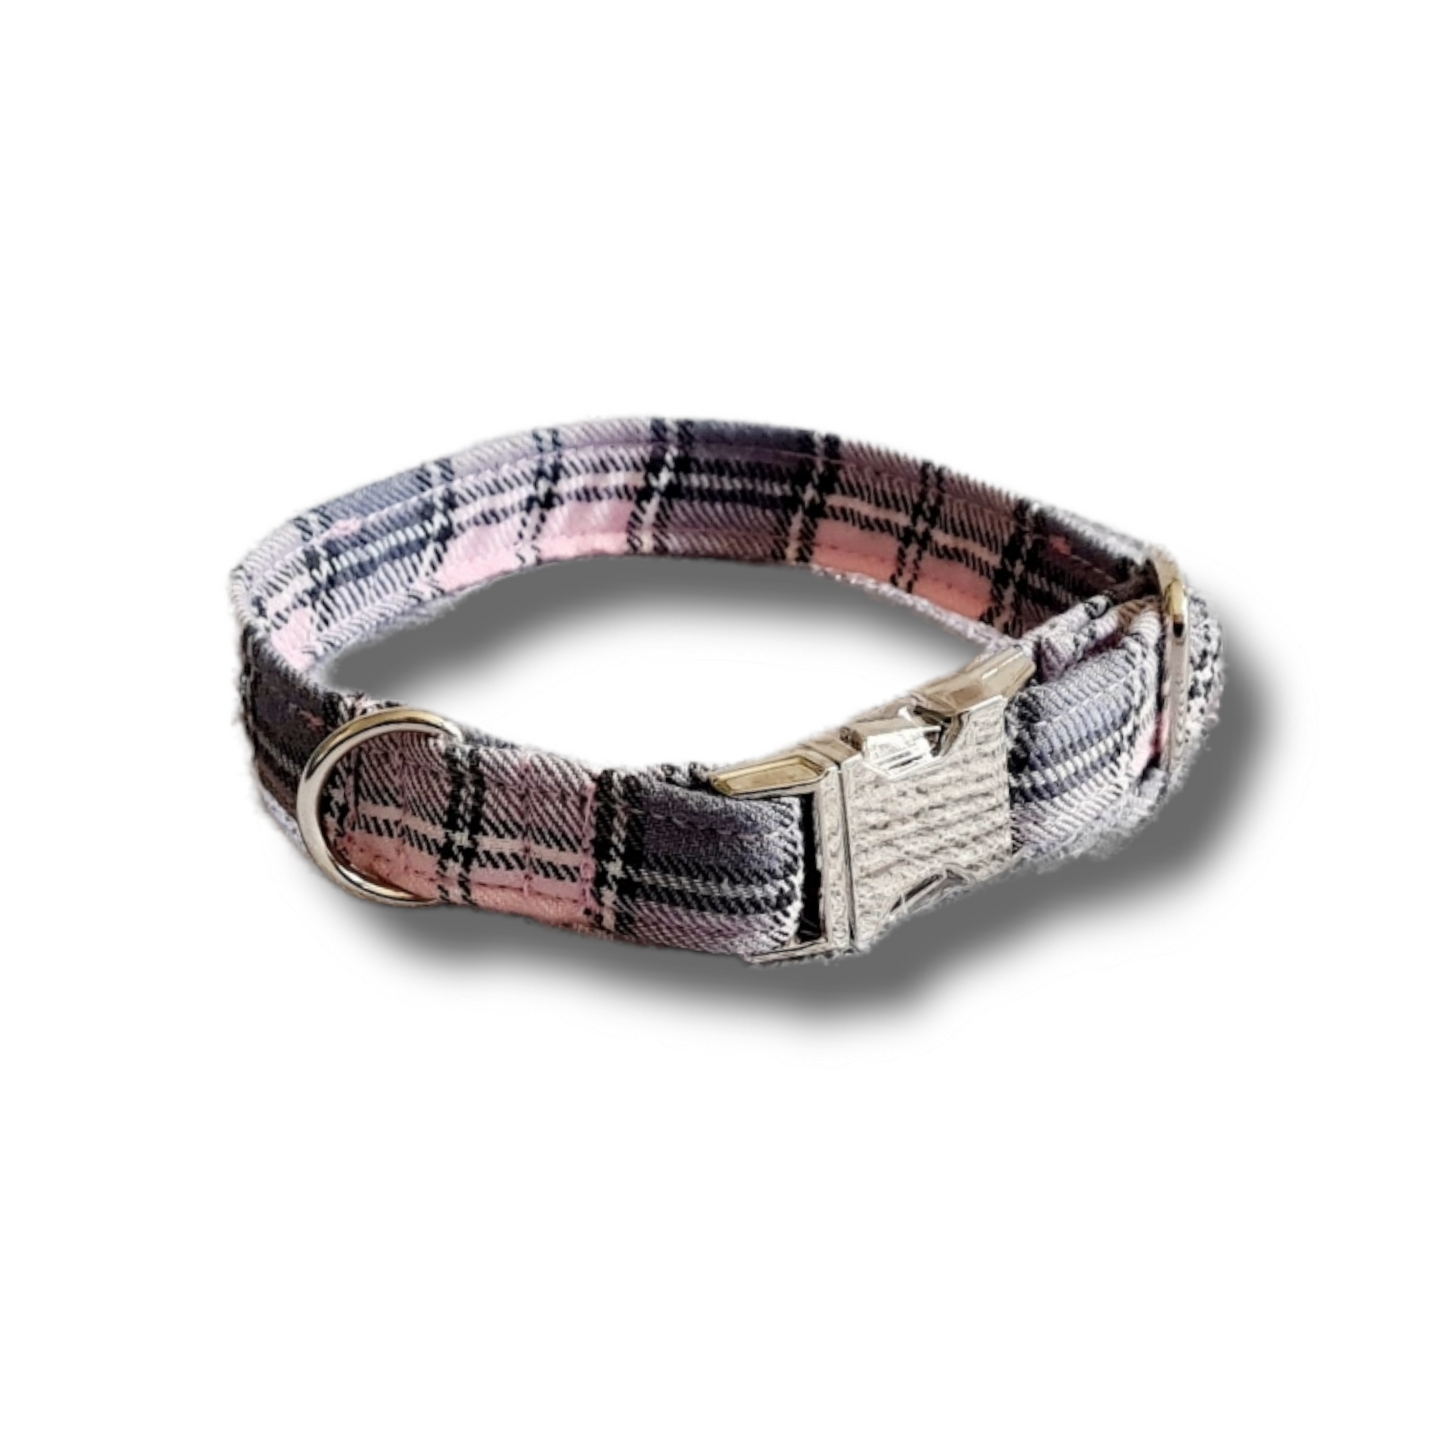 Pink and grey plaid Dog collar/lead